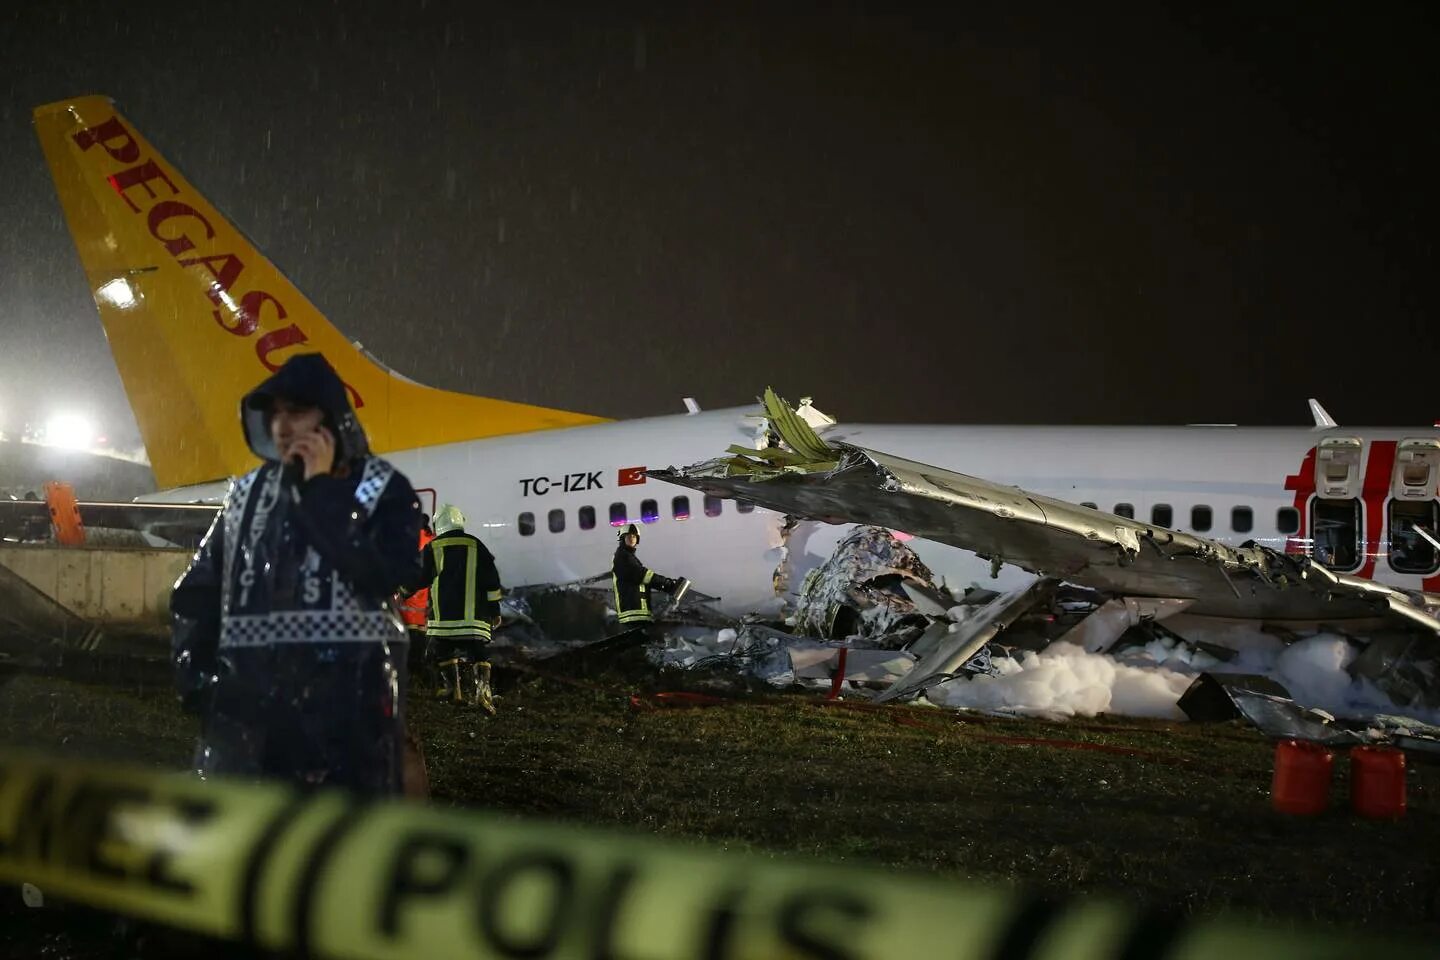 Авиакатастрофа посадка. Посадка Boeing 737. Боинг 737-800 Pegasus Airlines. Авиакомпания Пегасус авиакатастрофа. Крушение Boeing 737 в Стамбуле.